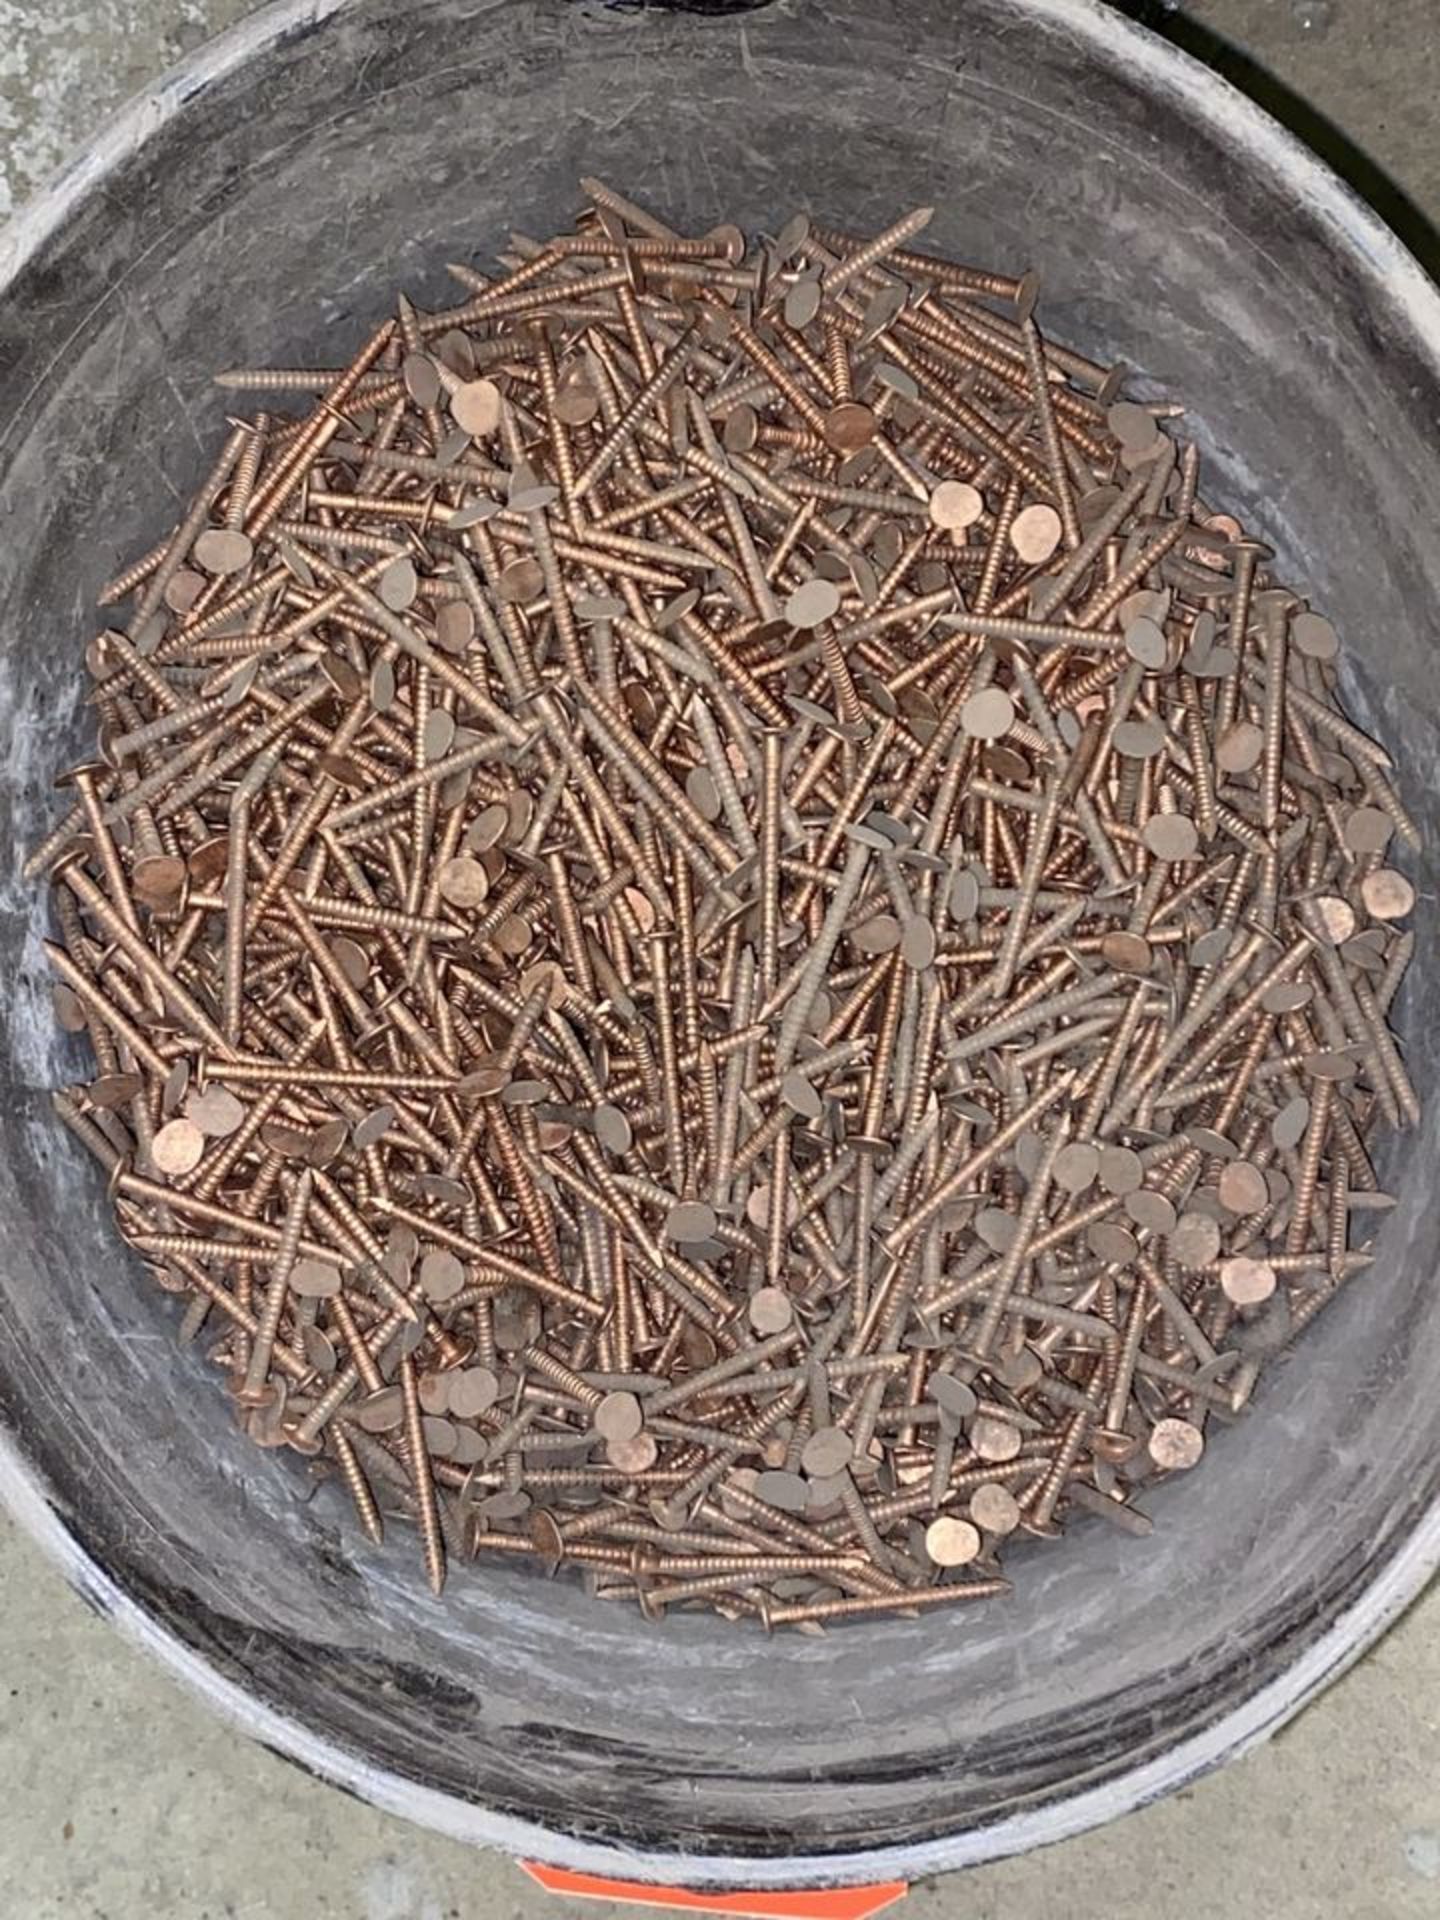 Lot - Copper Nails in 5-Gallon Plastic Bucket - Image 2 of 2